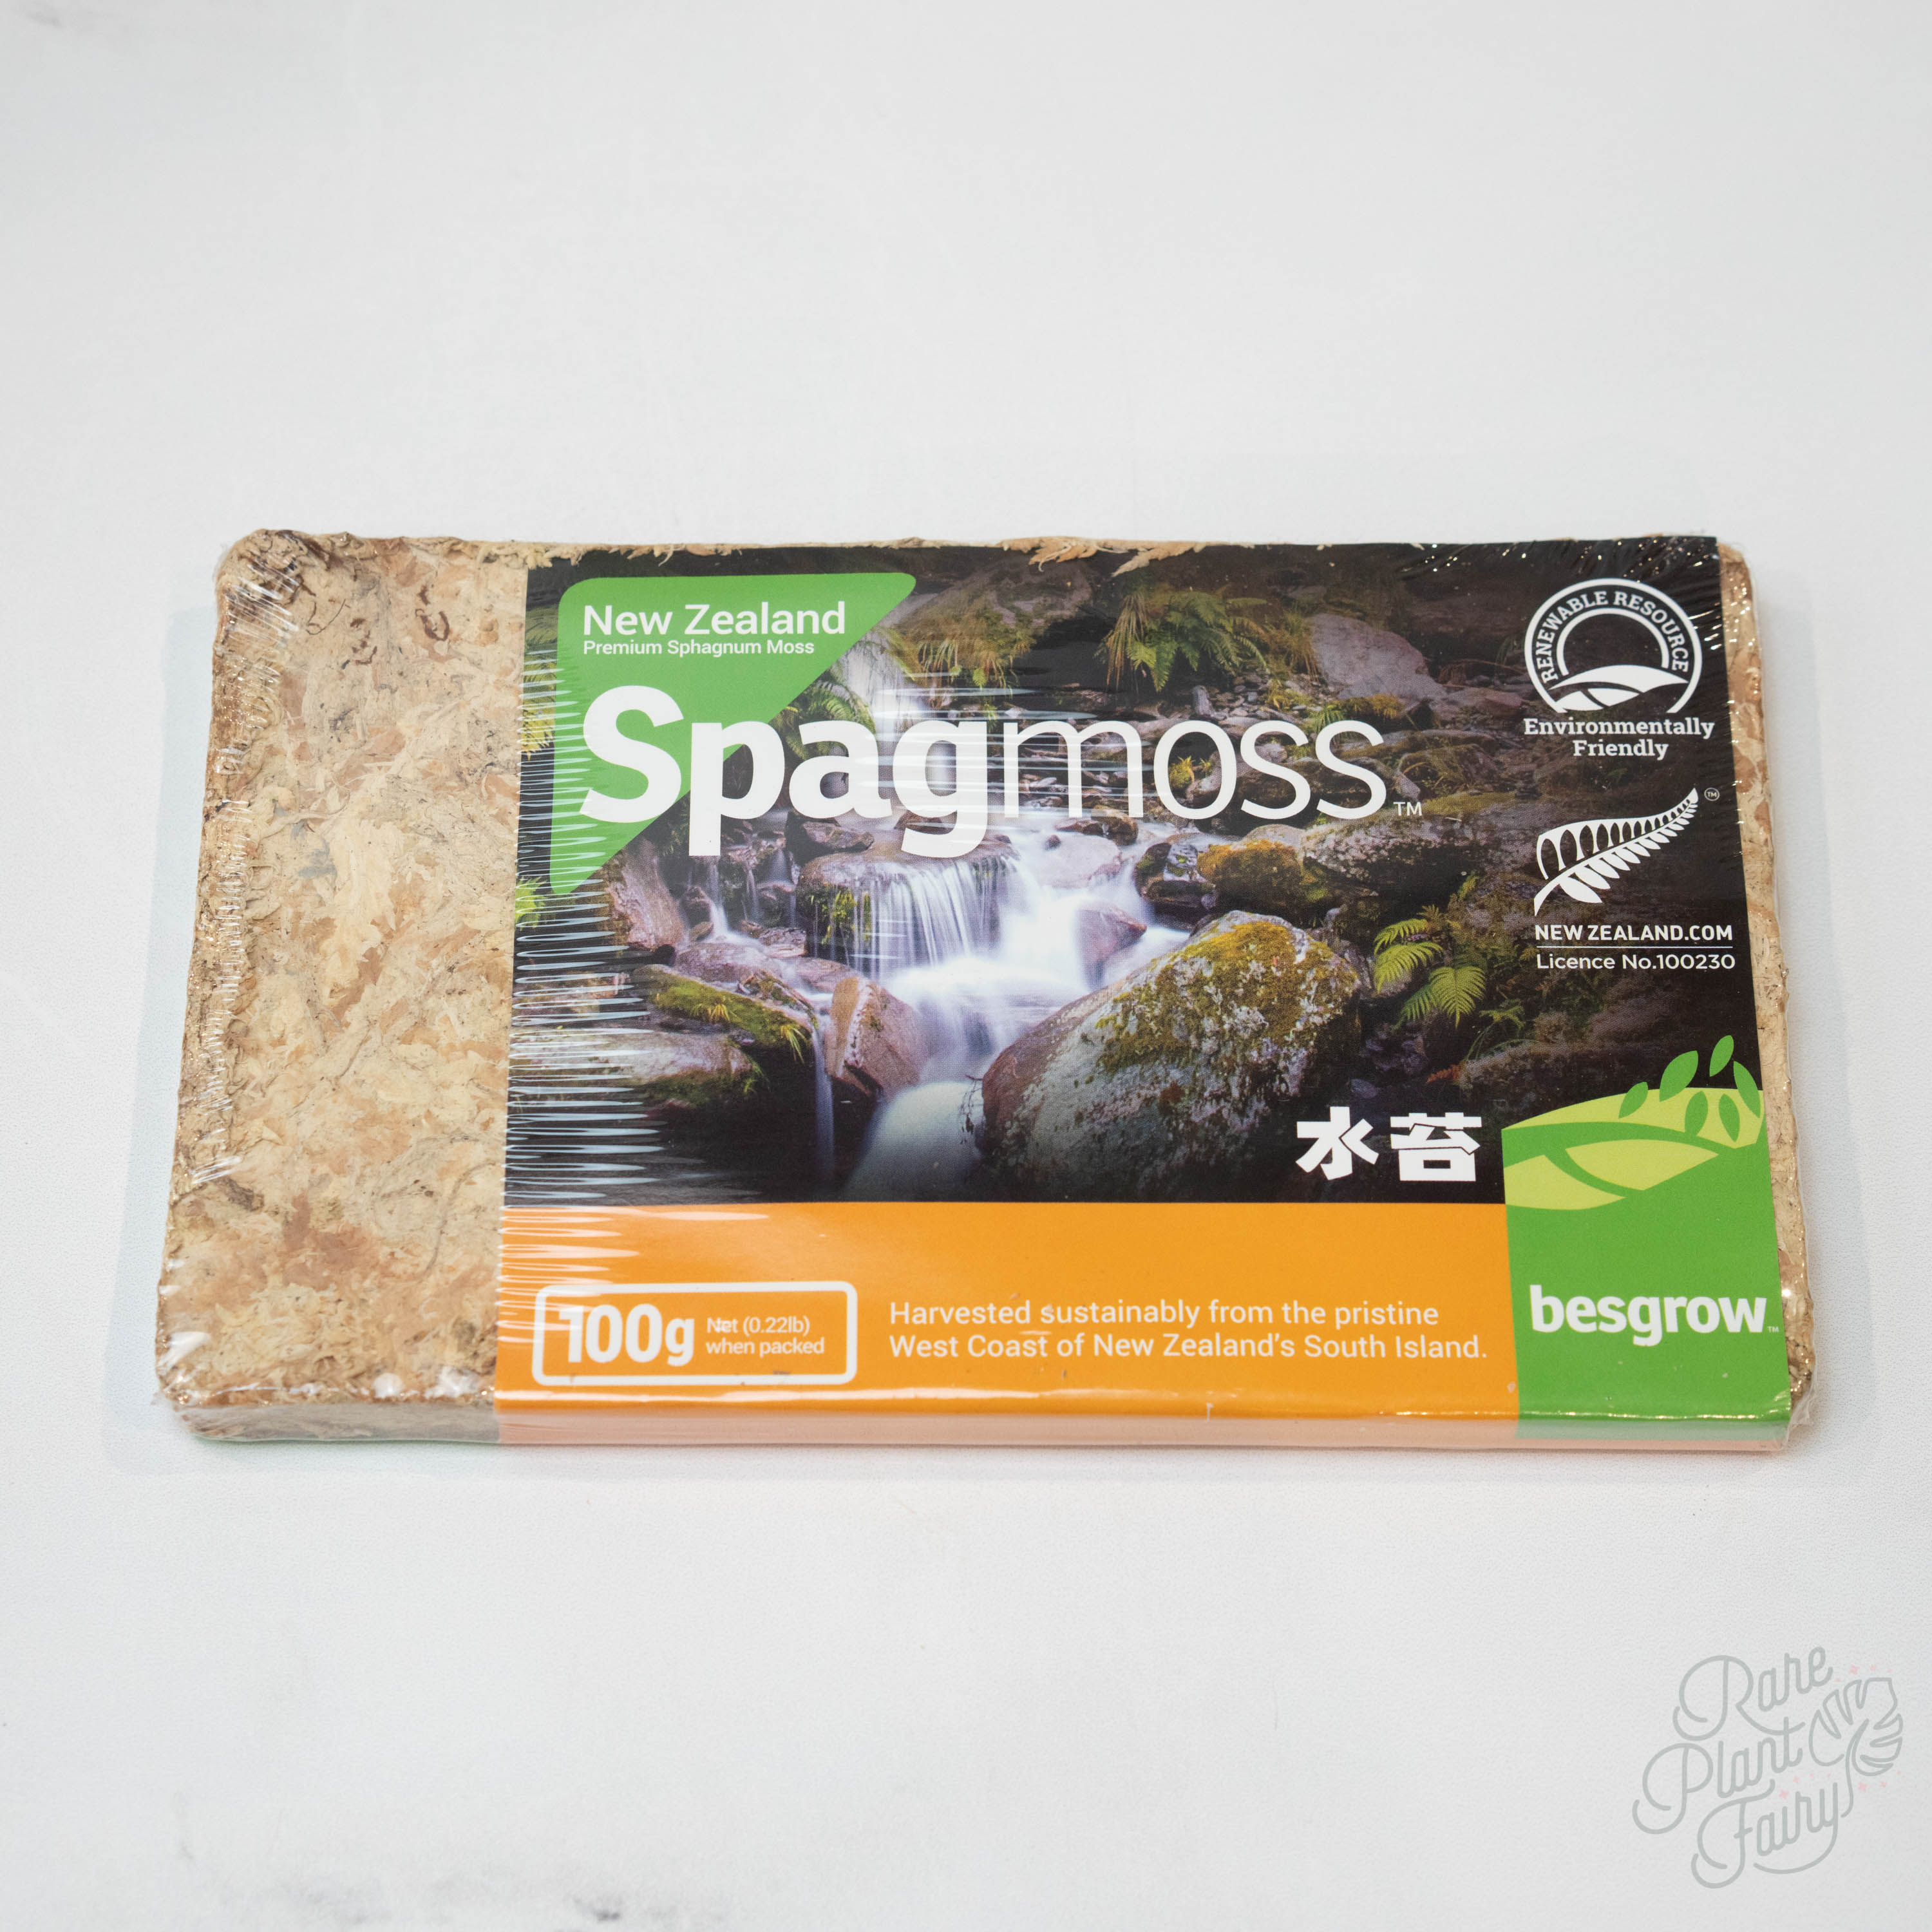 New Zealand Sphagnum Moss - CLASSIC (15 kg, 1200L)